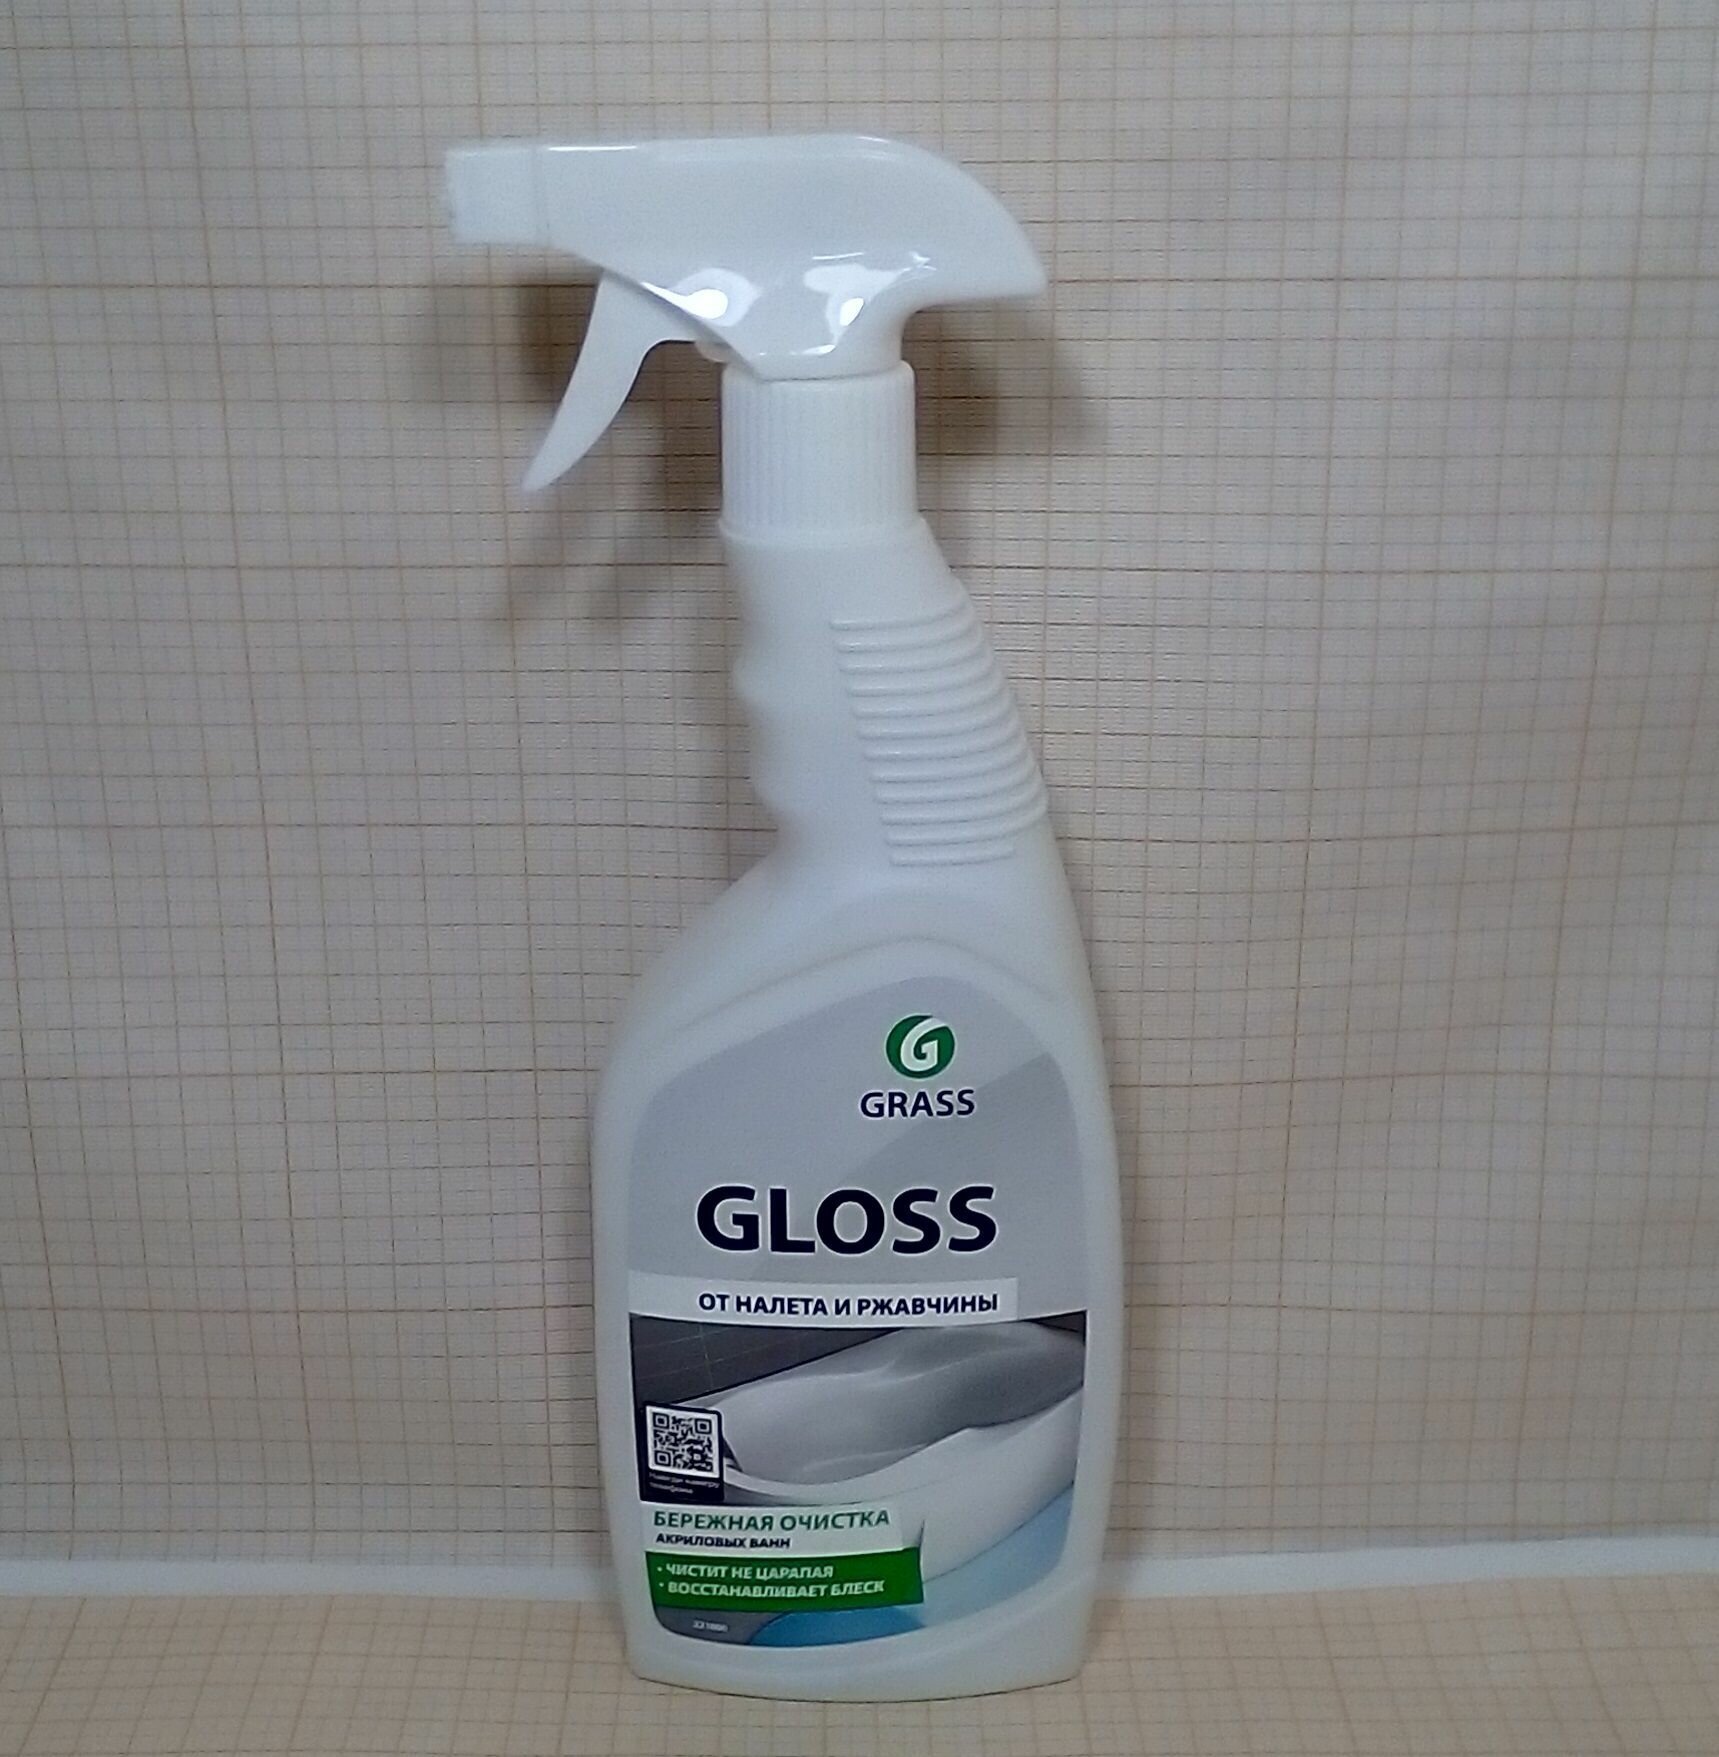 GRASS Чистящее средство для ванной комнаты Grass Gloss, 600 мл - фотография № 14